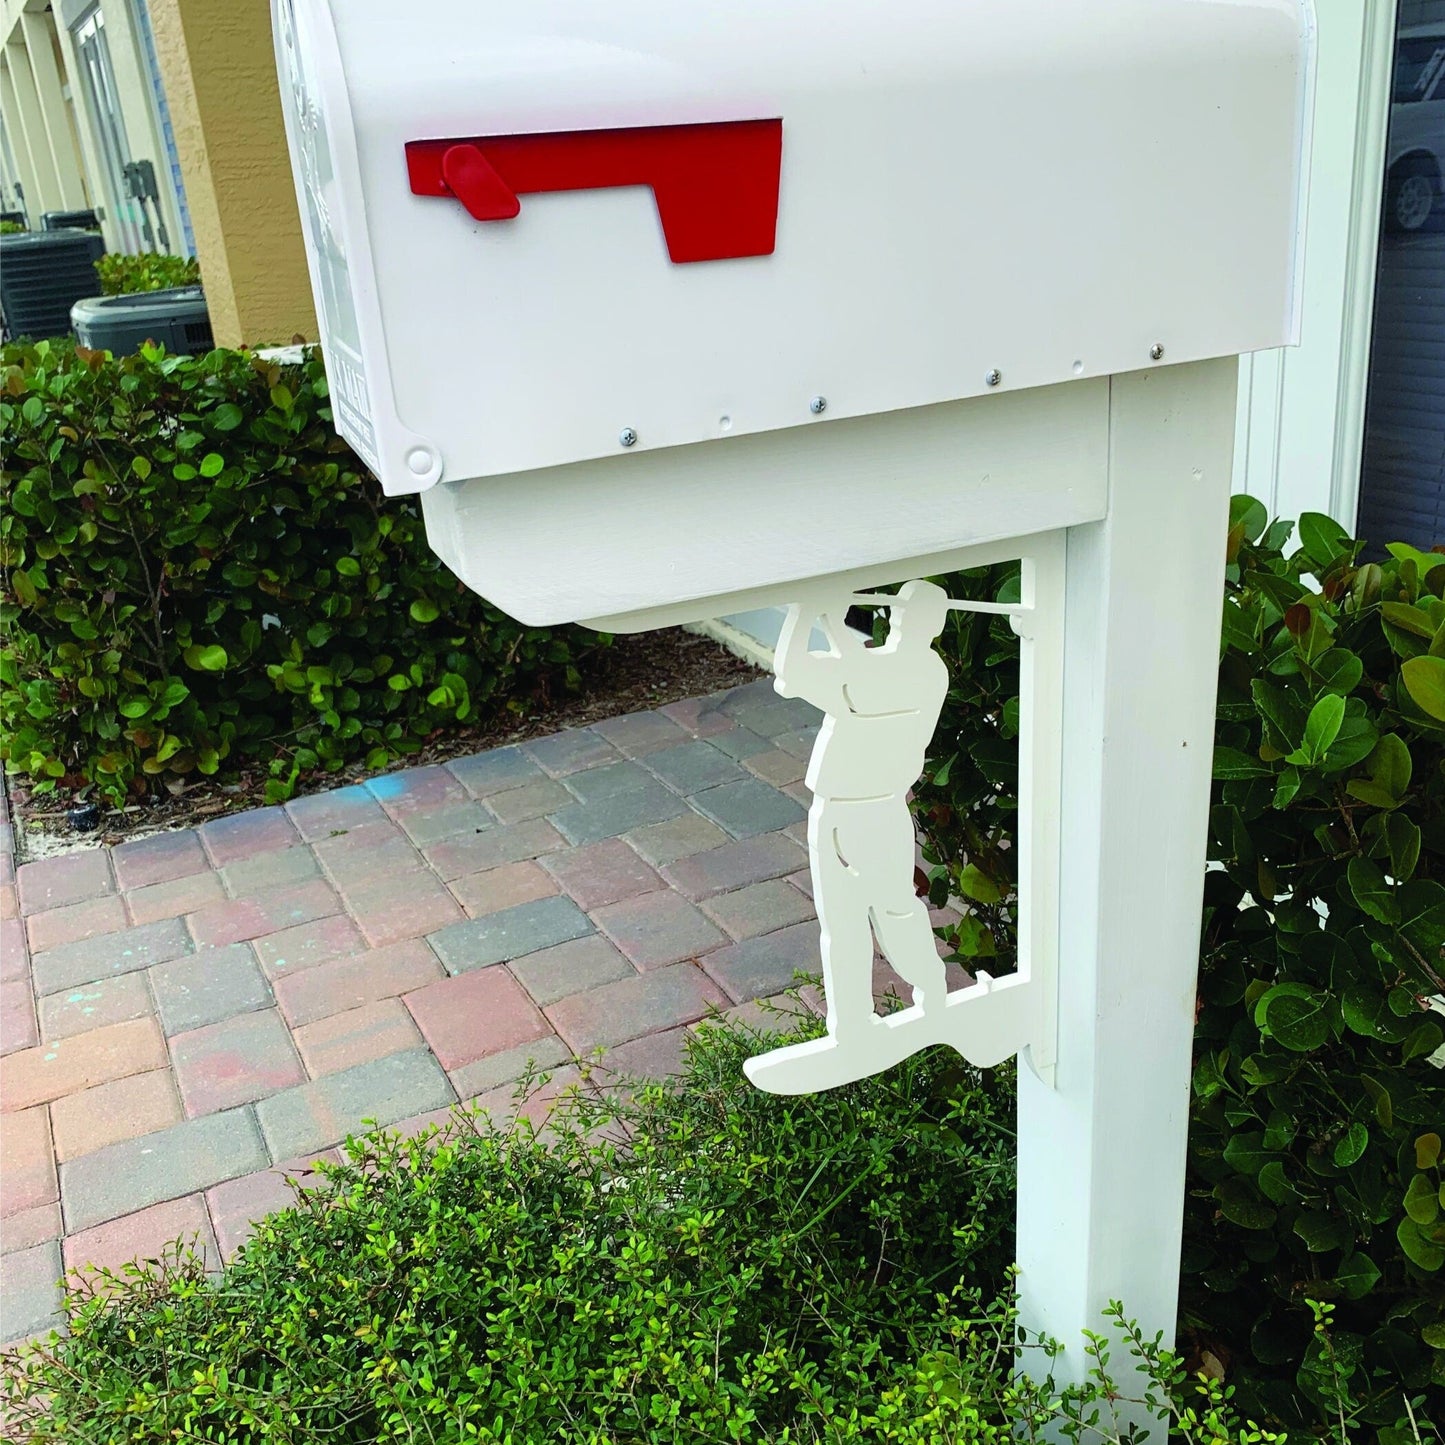 Mailbox Bracket - Golfer Medium 12x16 inch, Custom Mailbox, Coastal, Tropical, Bracket, Outdoor Decor, Mailbox & Post Not Included